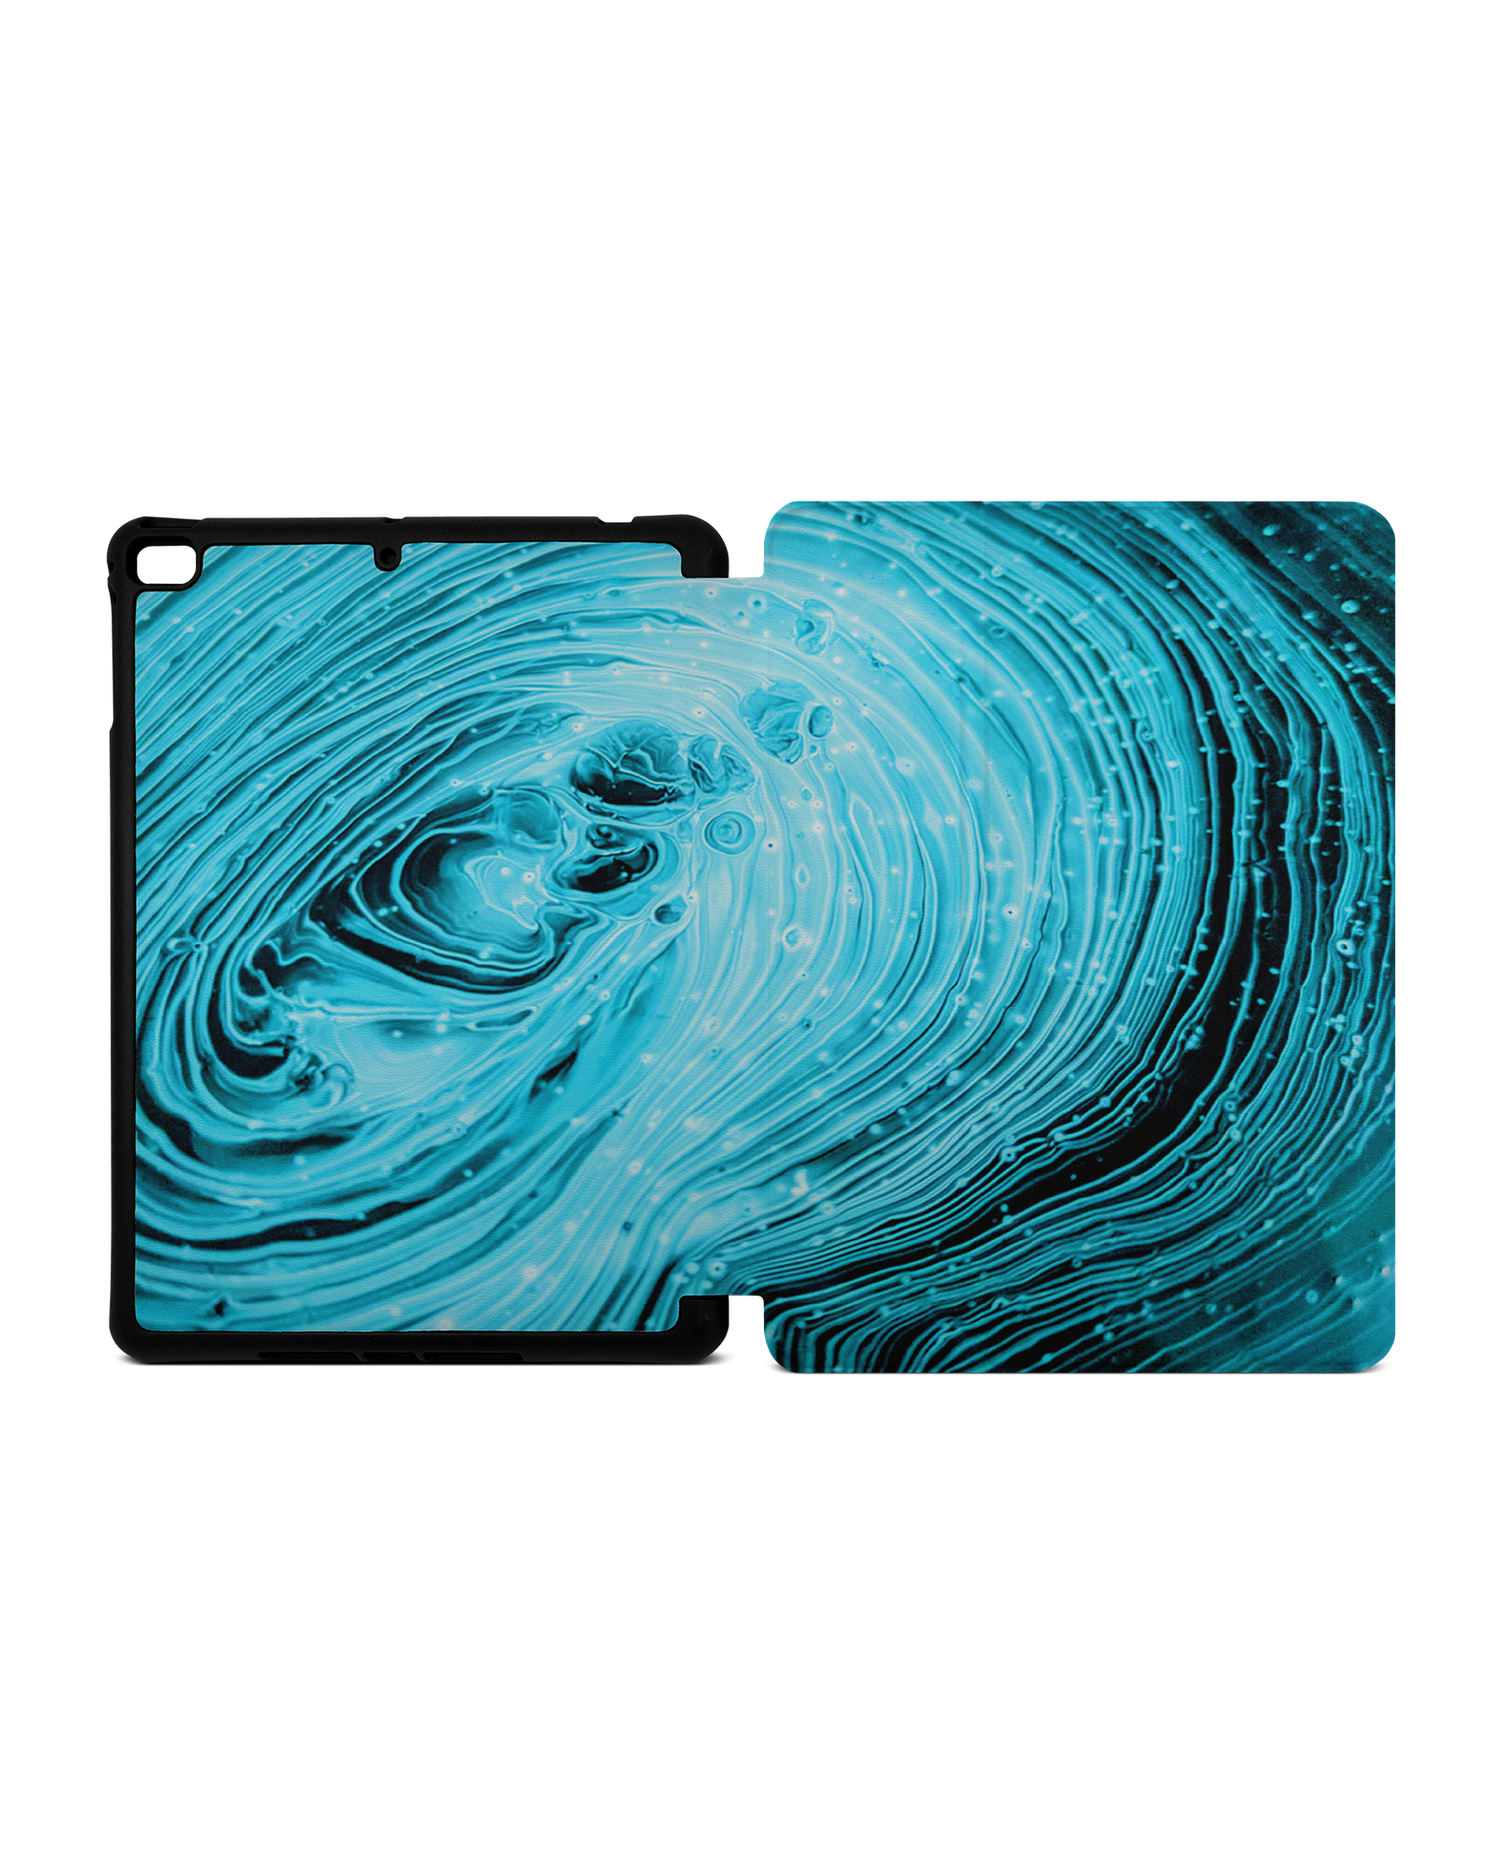 Turquoise Ripples iPad Hülle mit Stifthalter Apple iPad mini 5 (2019): Geöffnet Außenansicht